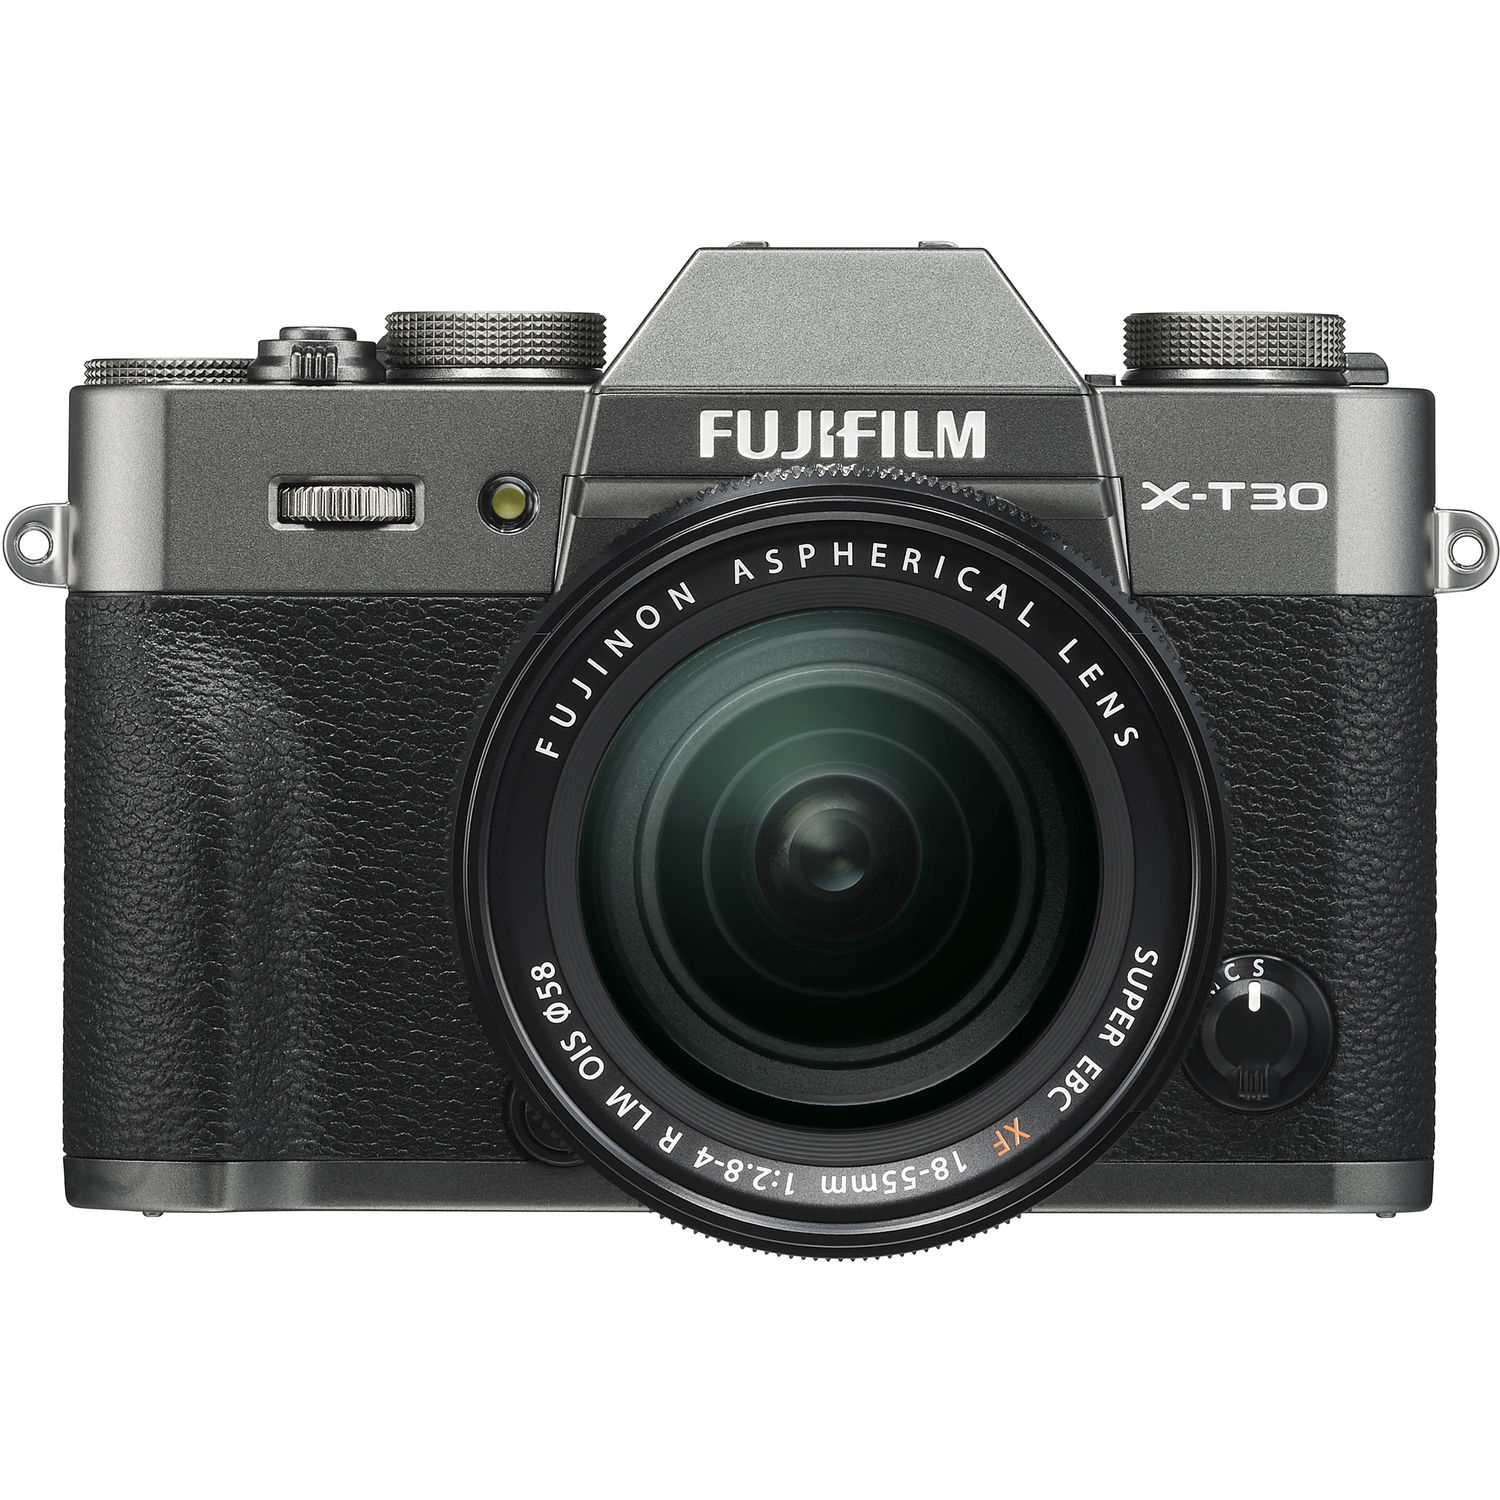 Fujifilm X-T30 Mirrorless Digital Camera with 18-55mm Lens (Charcoal Silver)